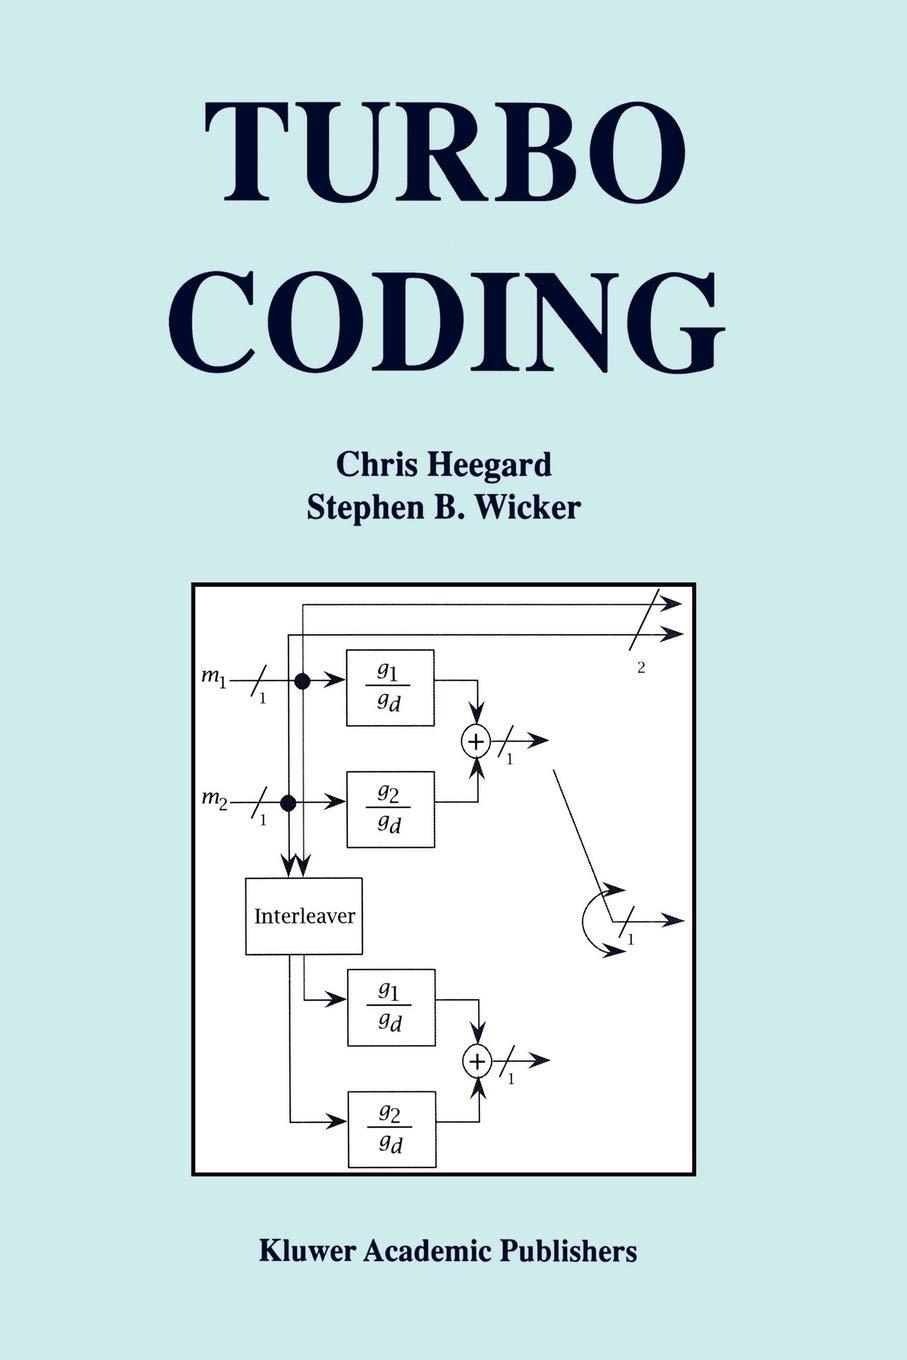 turbo coding 1999 edition chris heegard, stephen b. wicker 1441950699, 978-1441950697